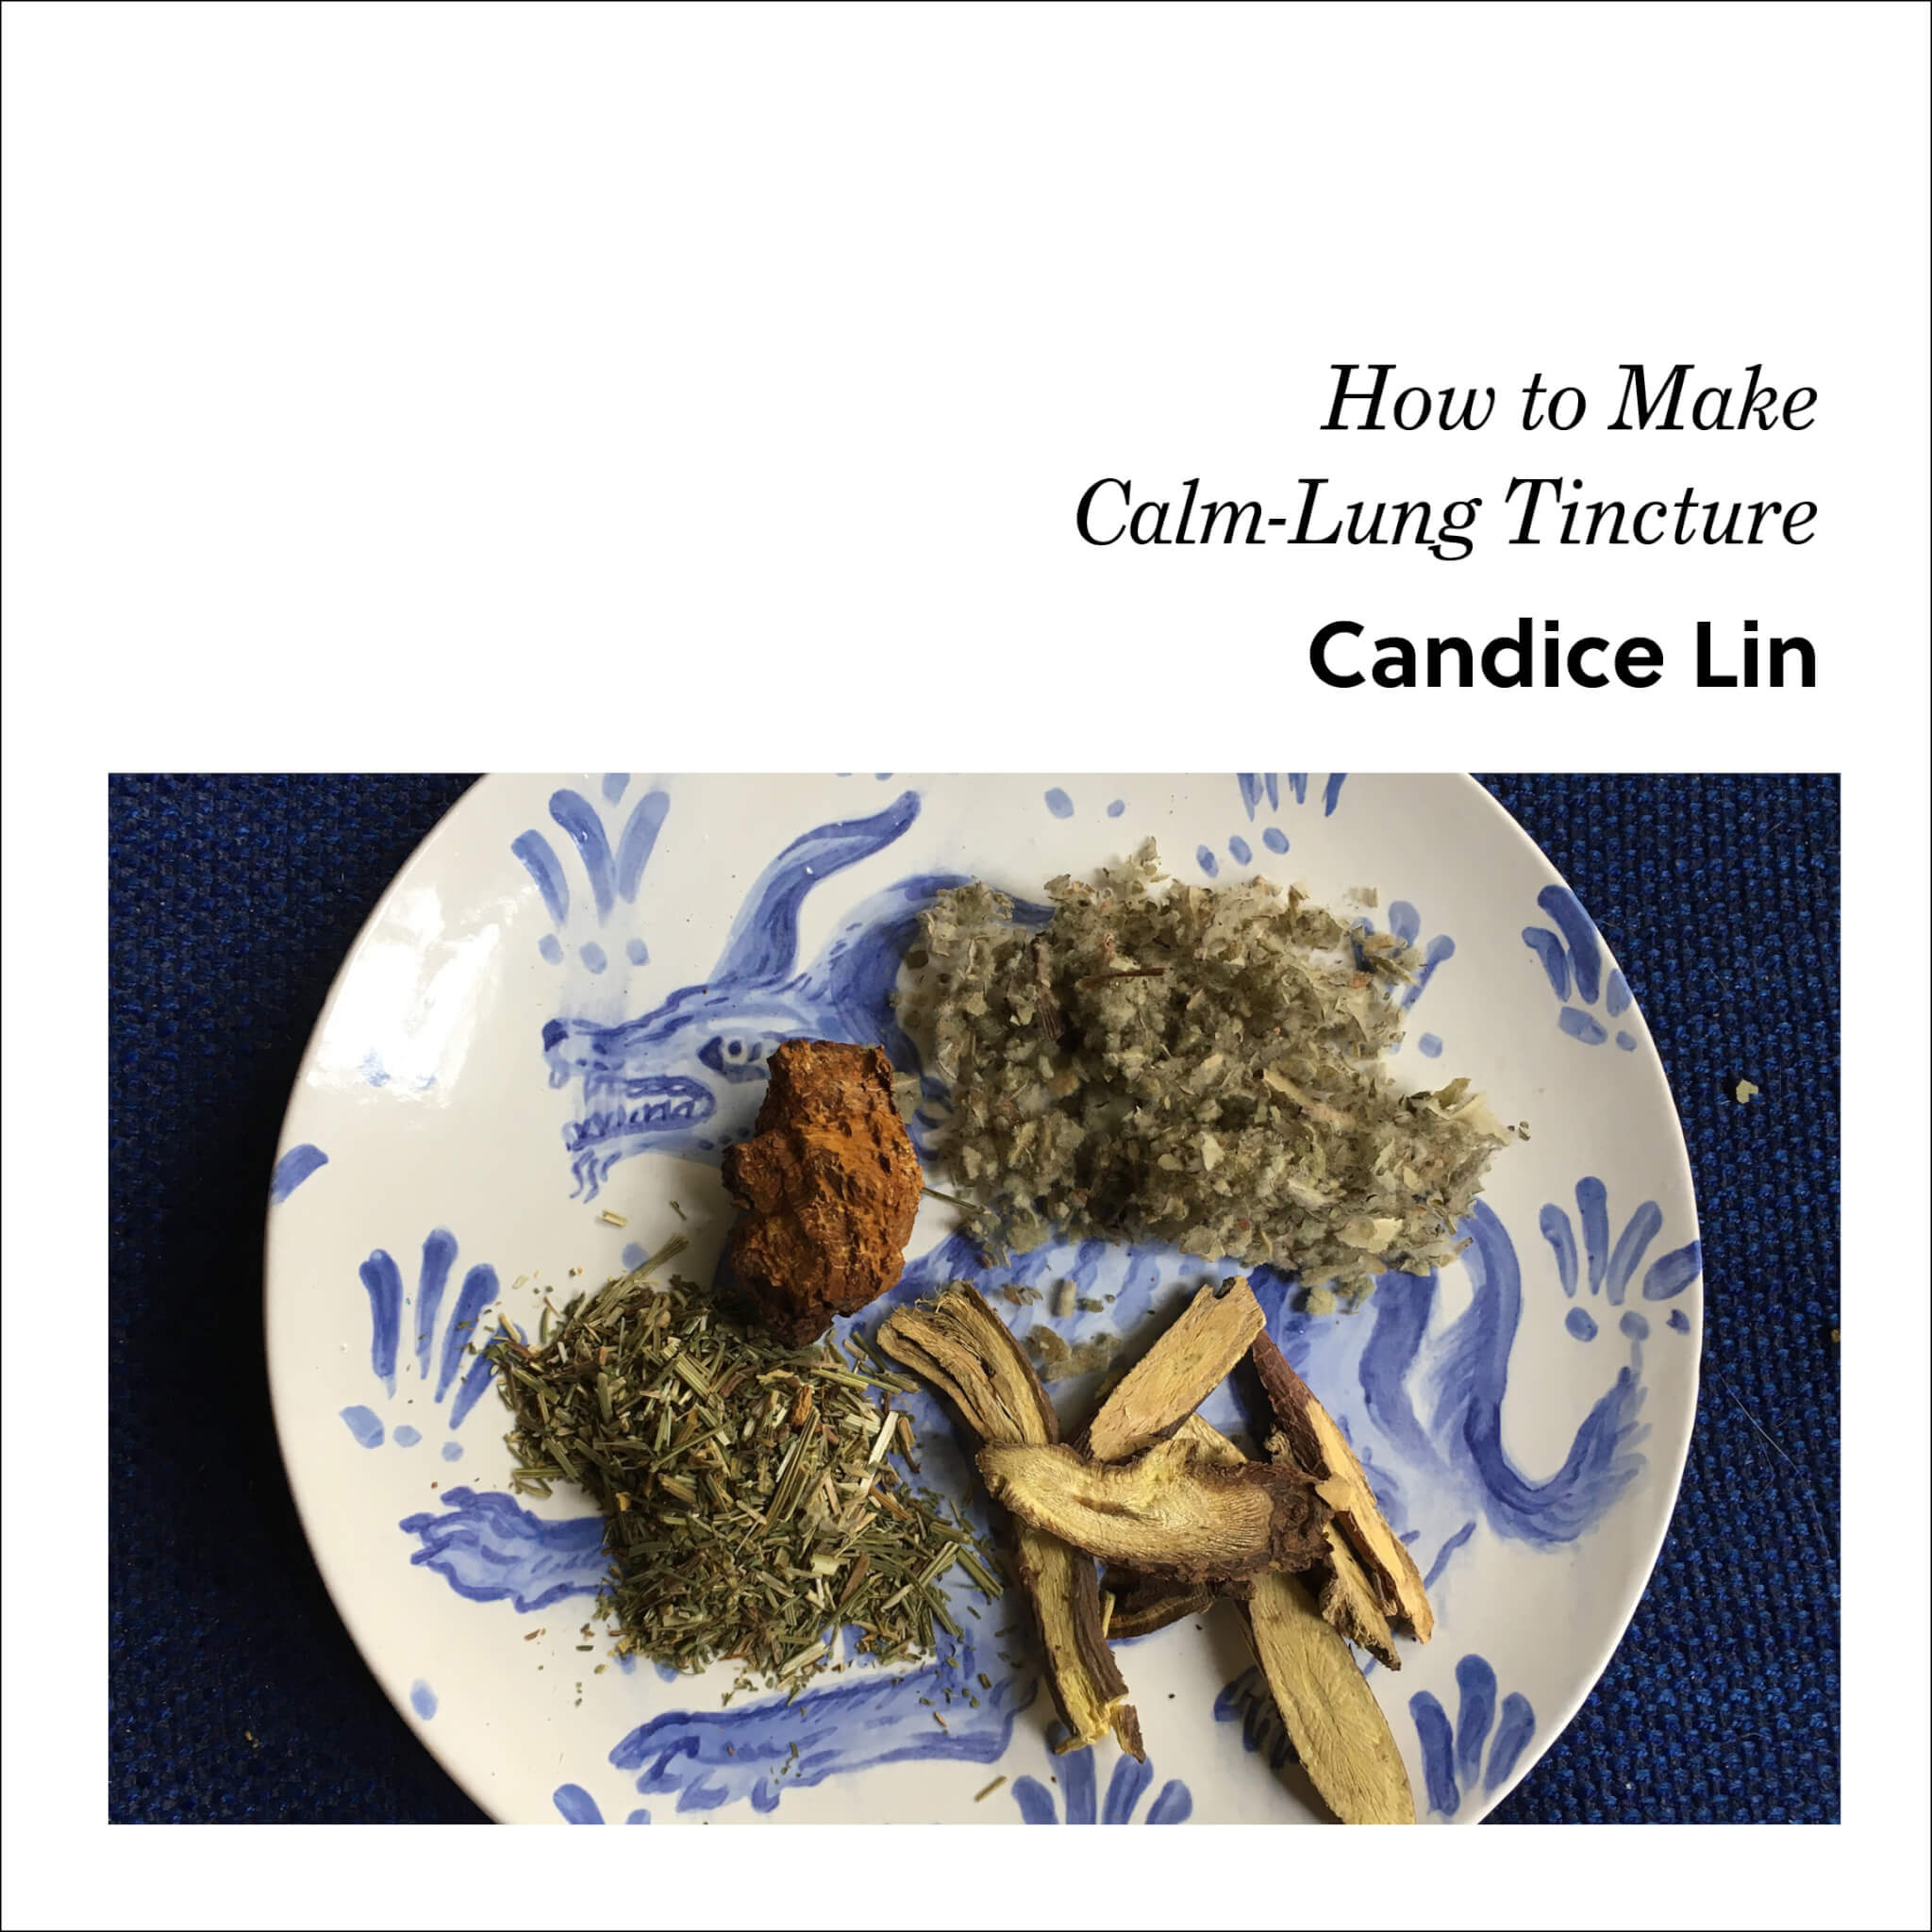 Week 1: Candice Lin